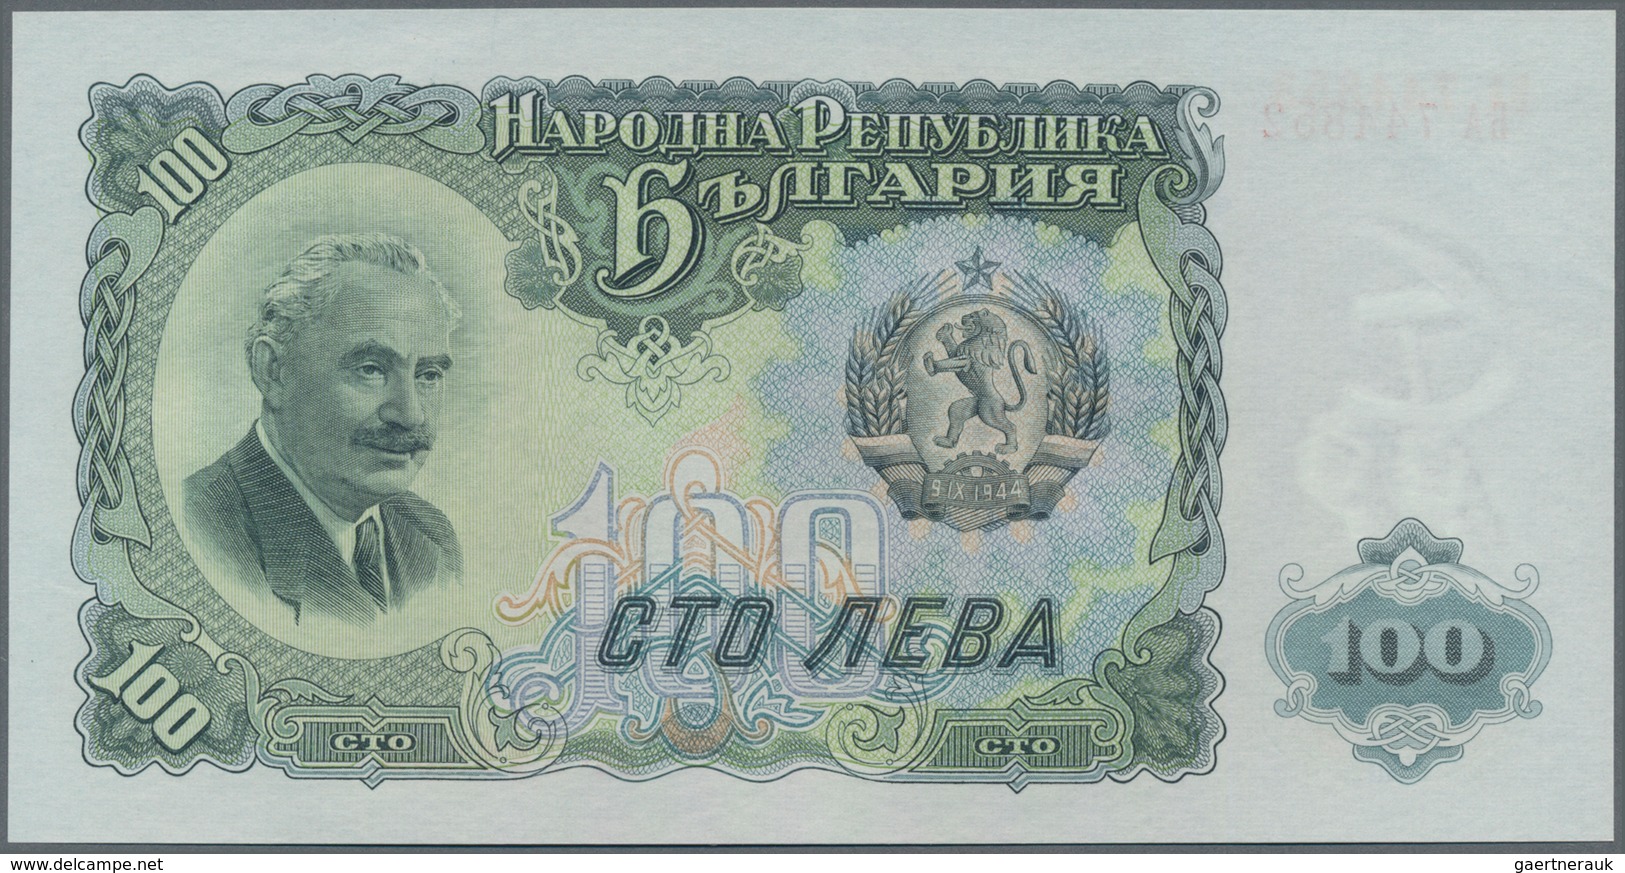 Bulgaria / Bulgarien: Very Nice Set With 20 Banknotes 1 - 500 Leva 1951-1990, P.80a-98, All In AUNC/ - Bulgarije